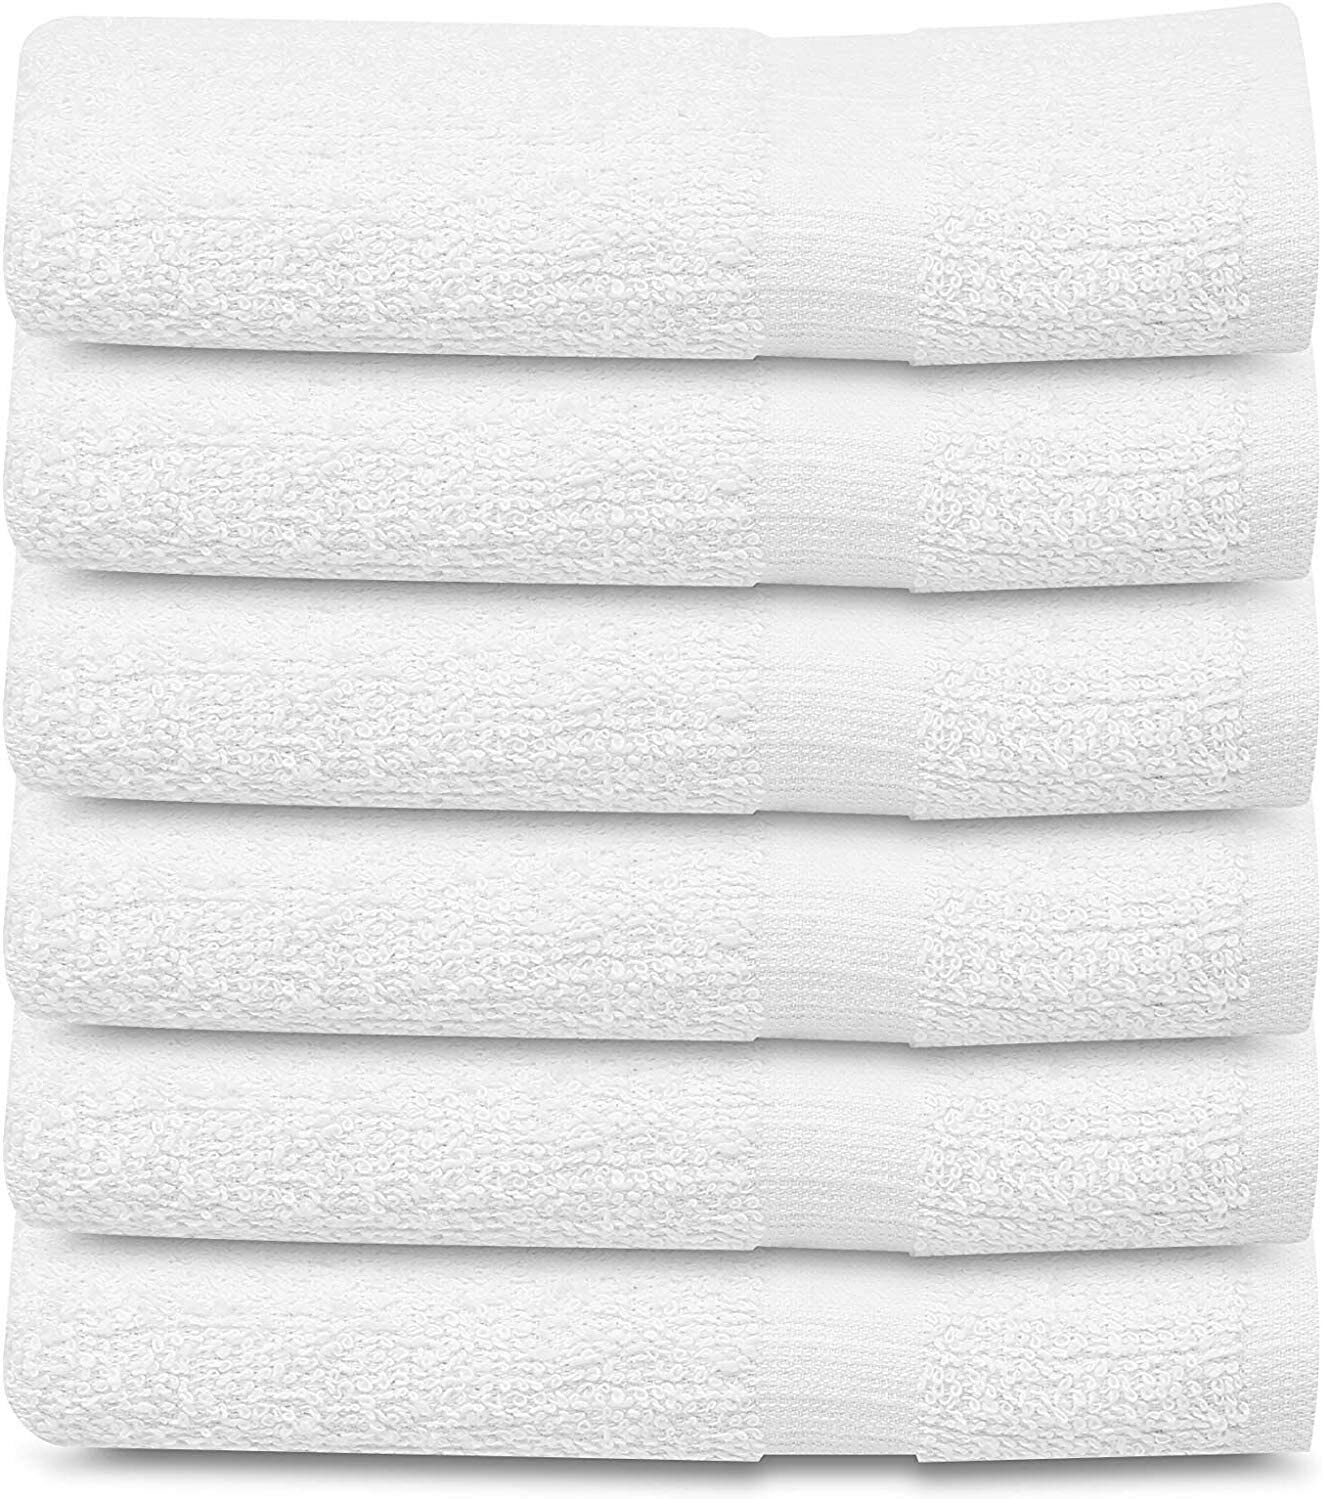 6 Pack "22x44"  White Cotton Towel Set Bath Pool Gym Towels 